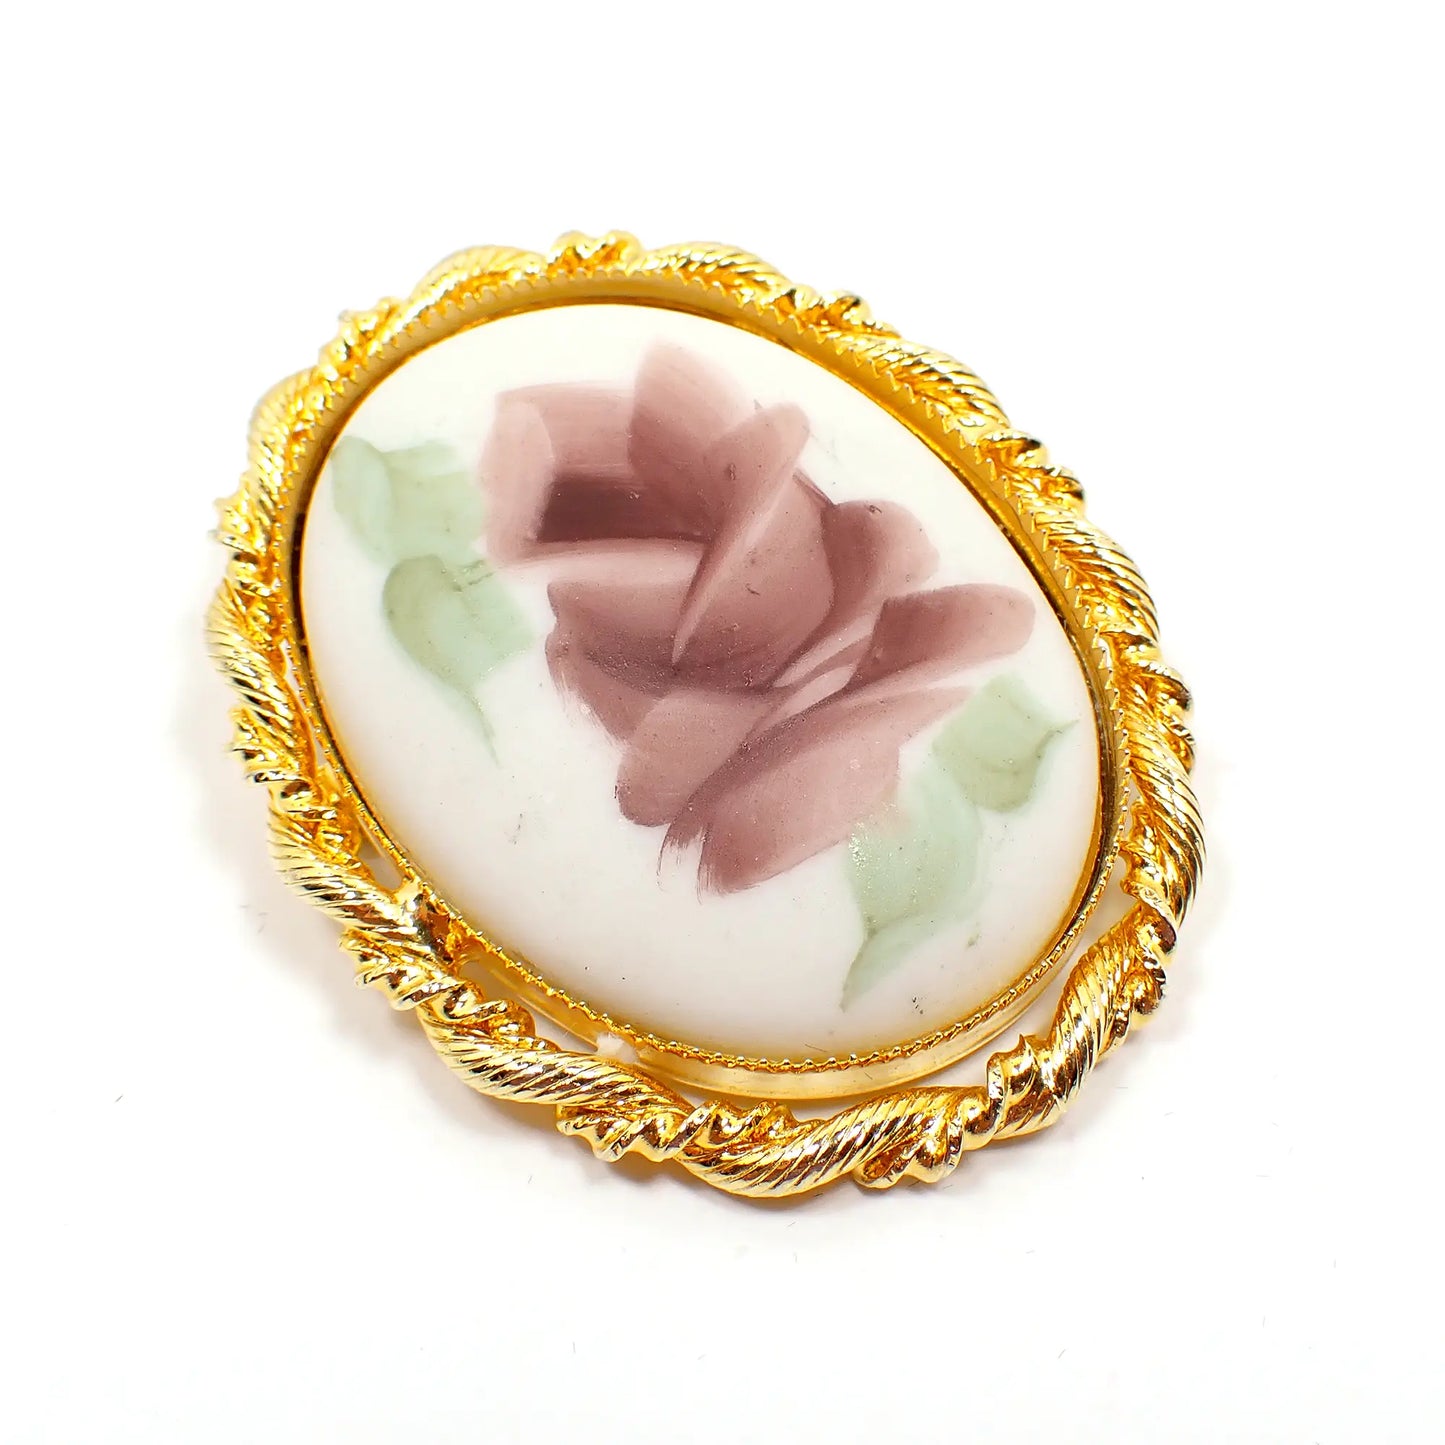 Painted Porcelain Flower Vintage Brooch Pendant